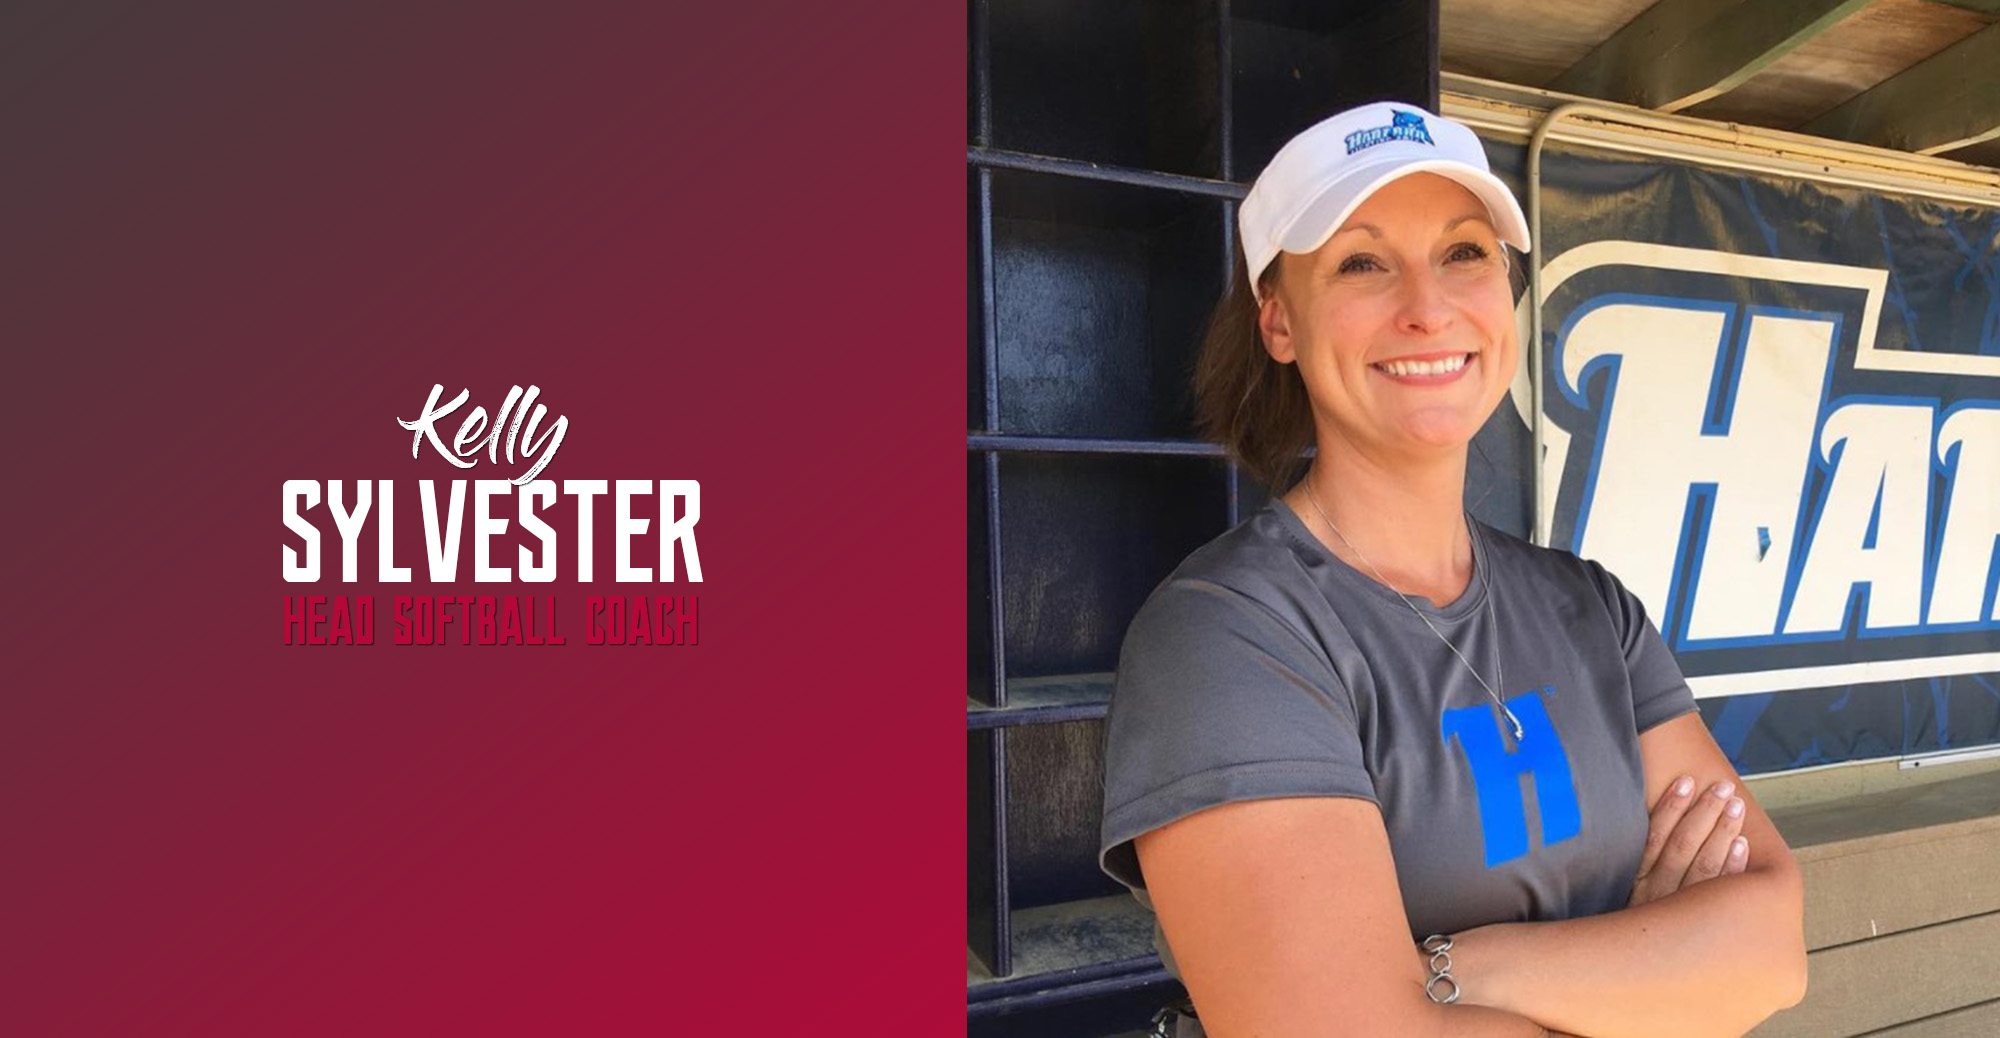 Austin College Names Kelly Sylvester Head Softball Coach